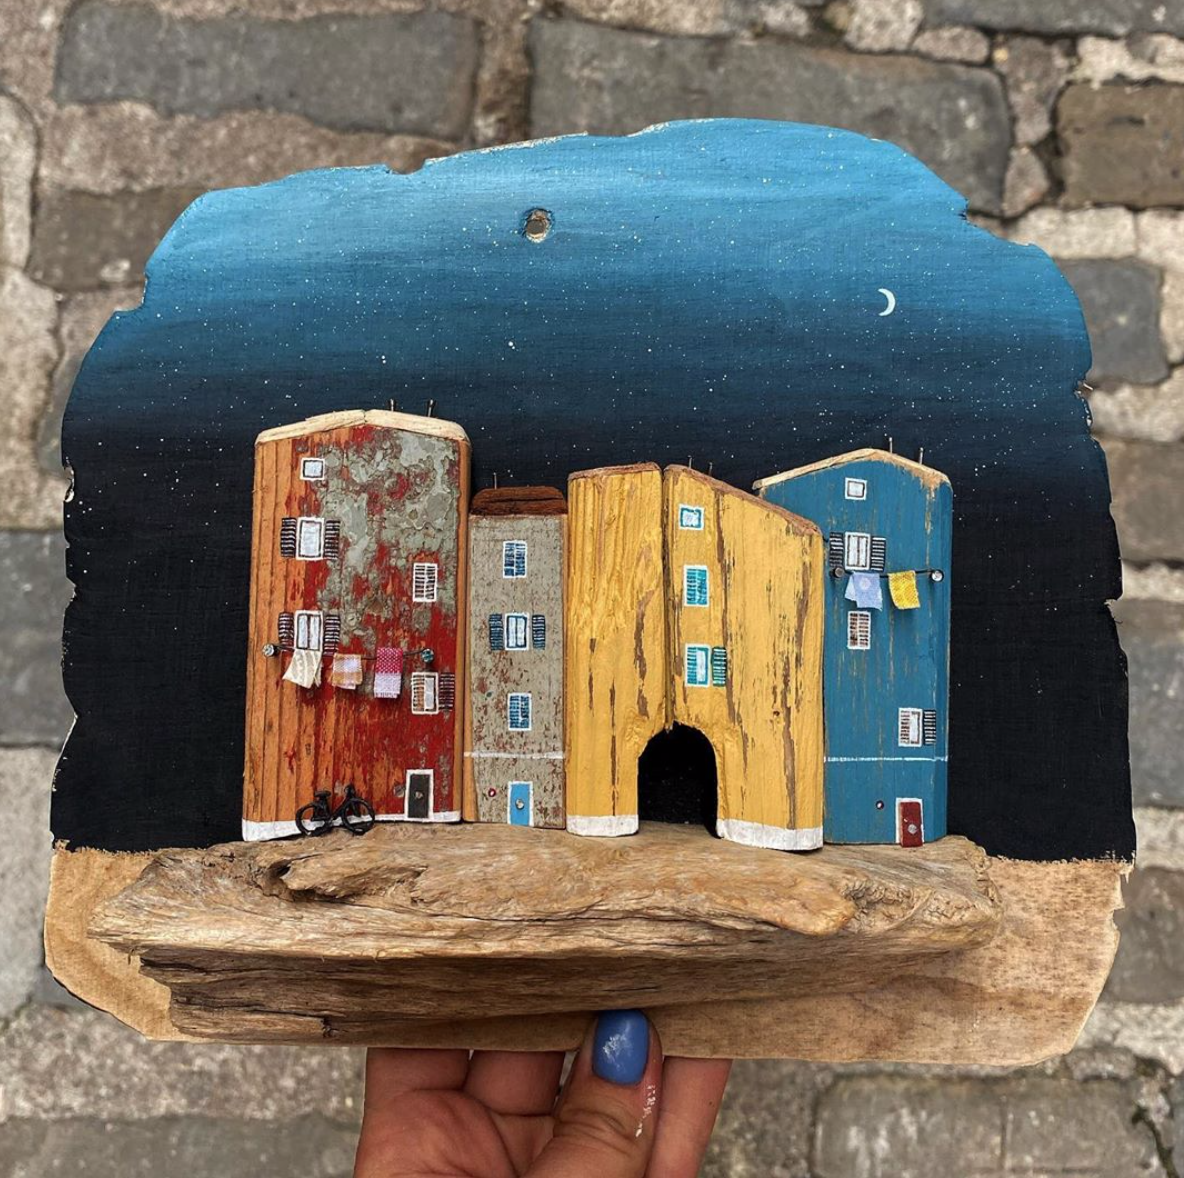 Nika's Tiny House - paintings on driftwood in Piran, Slovenia